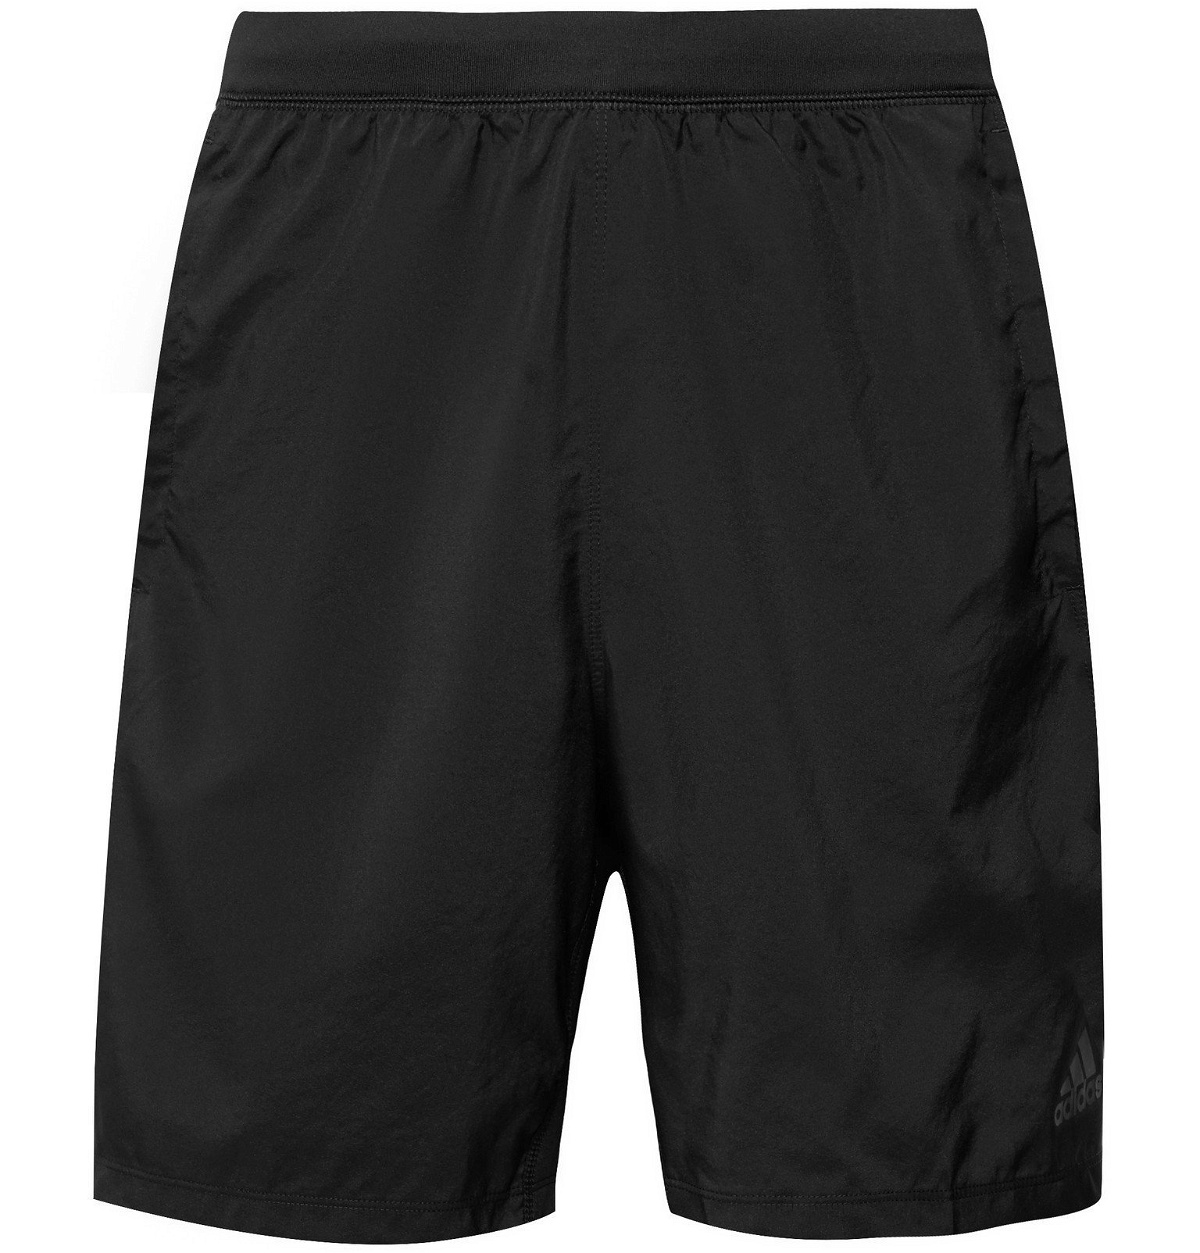 Adidas - Climalite Shorts - Black adidas